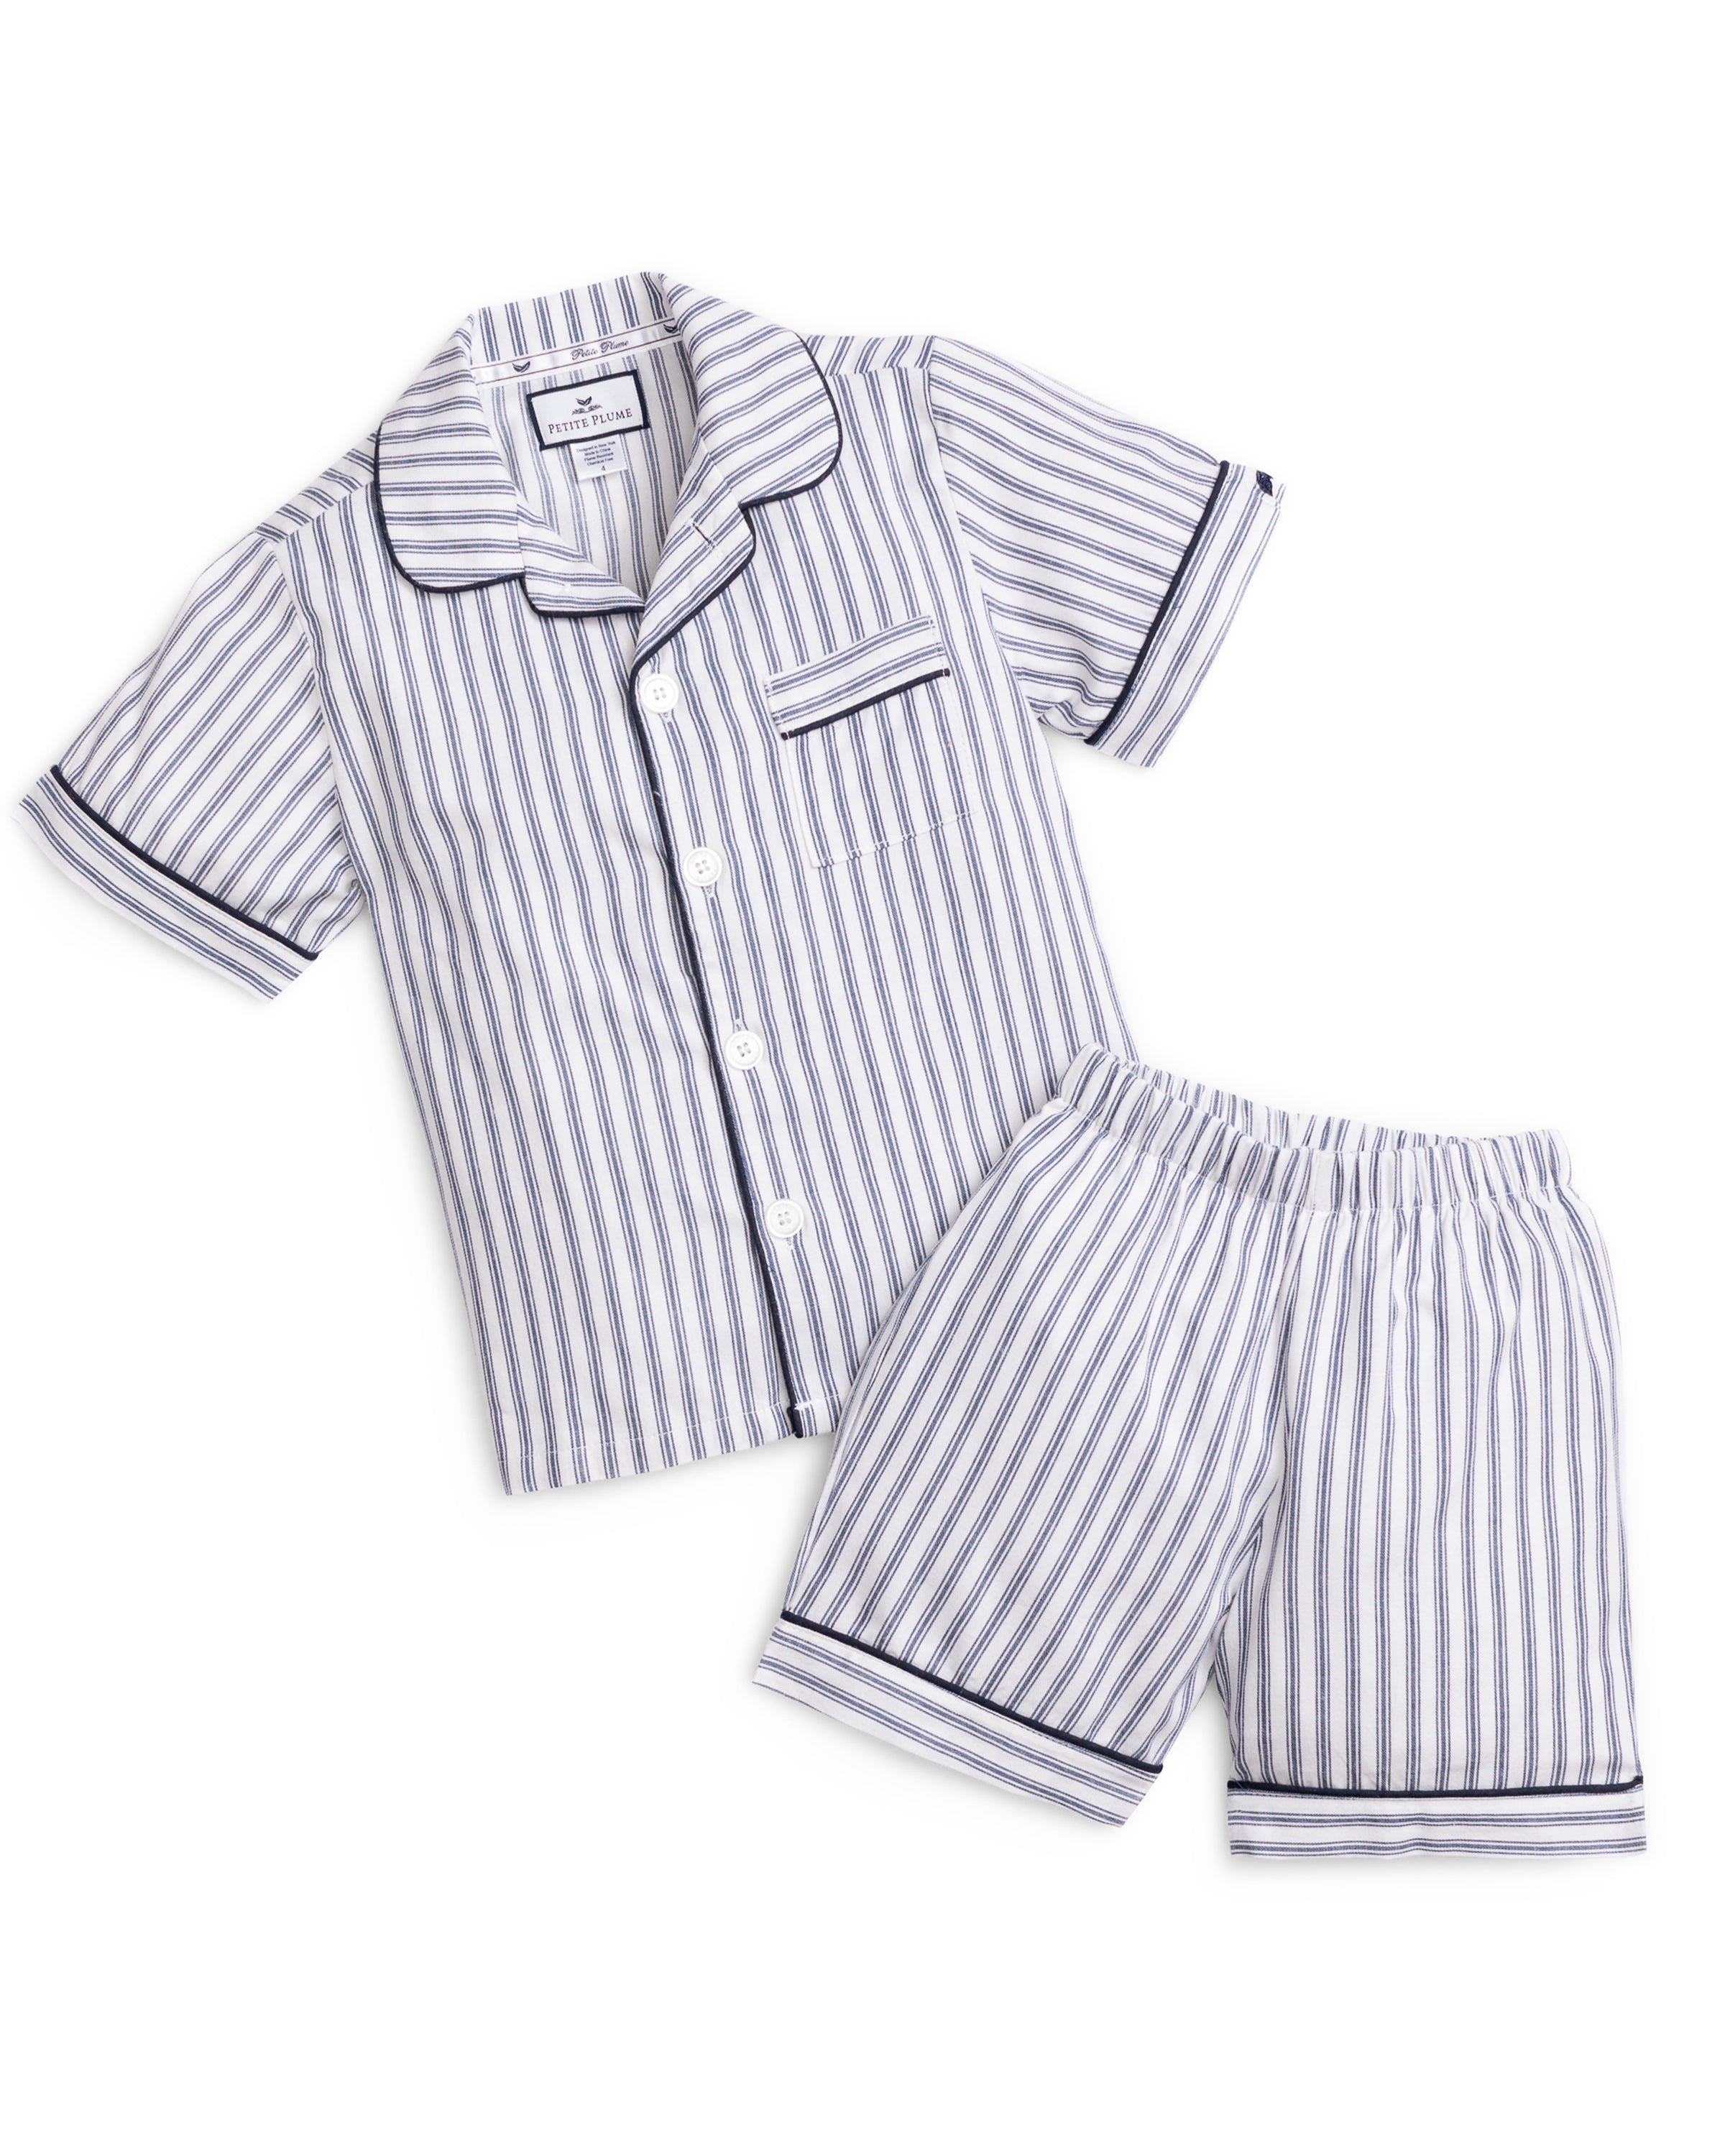 Kid's Twill Pajama Short Set in Navy French Ticking